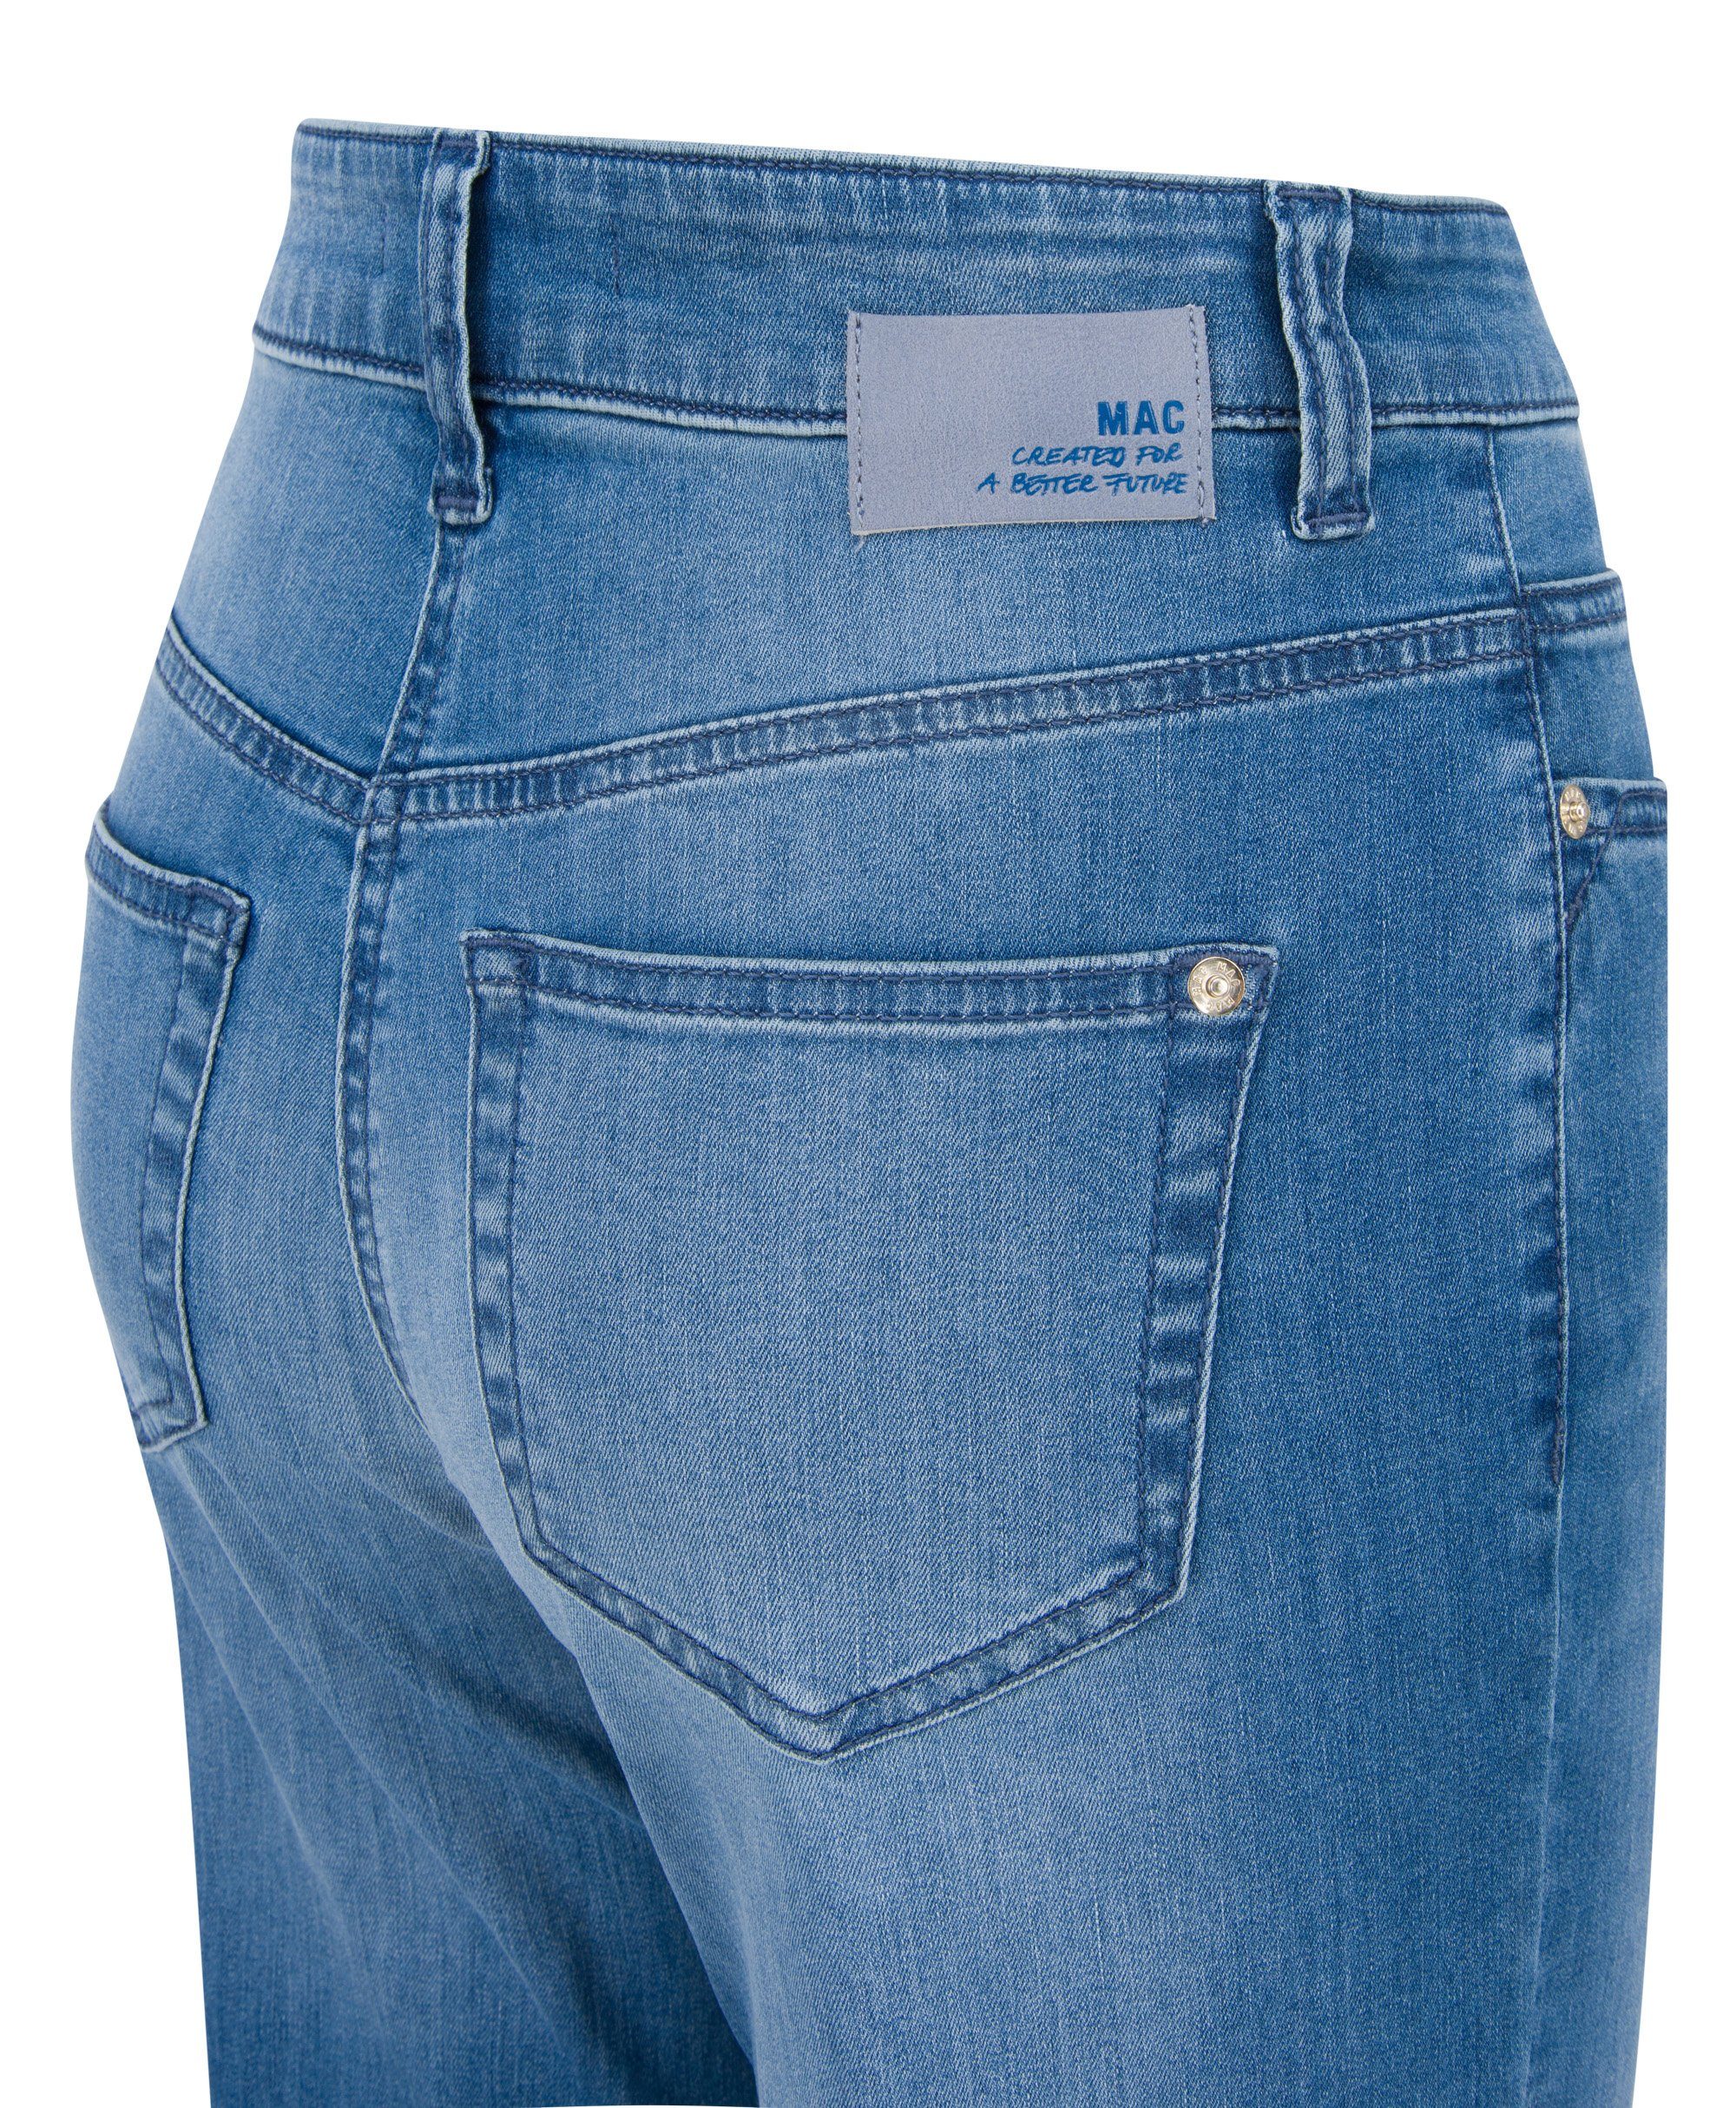 MAC mid Stretch-Jeans D546 5100-90-0380 wash main MAC blue STELLA